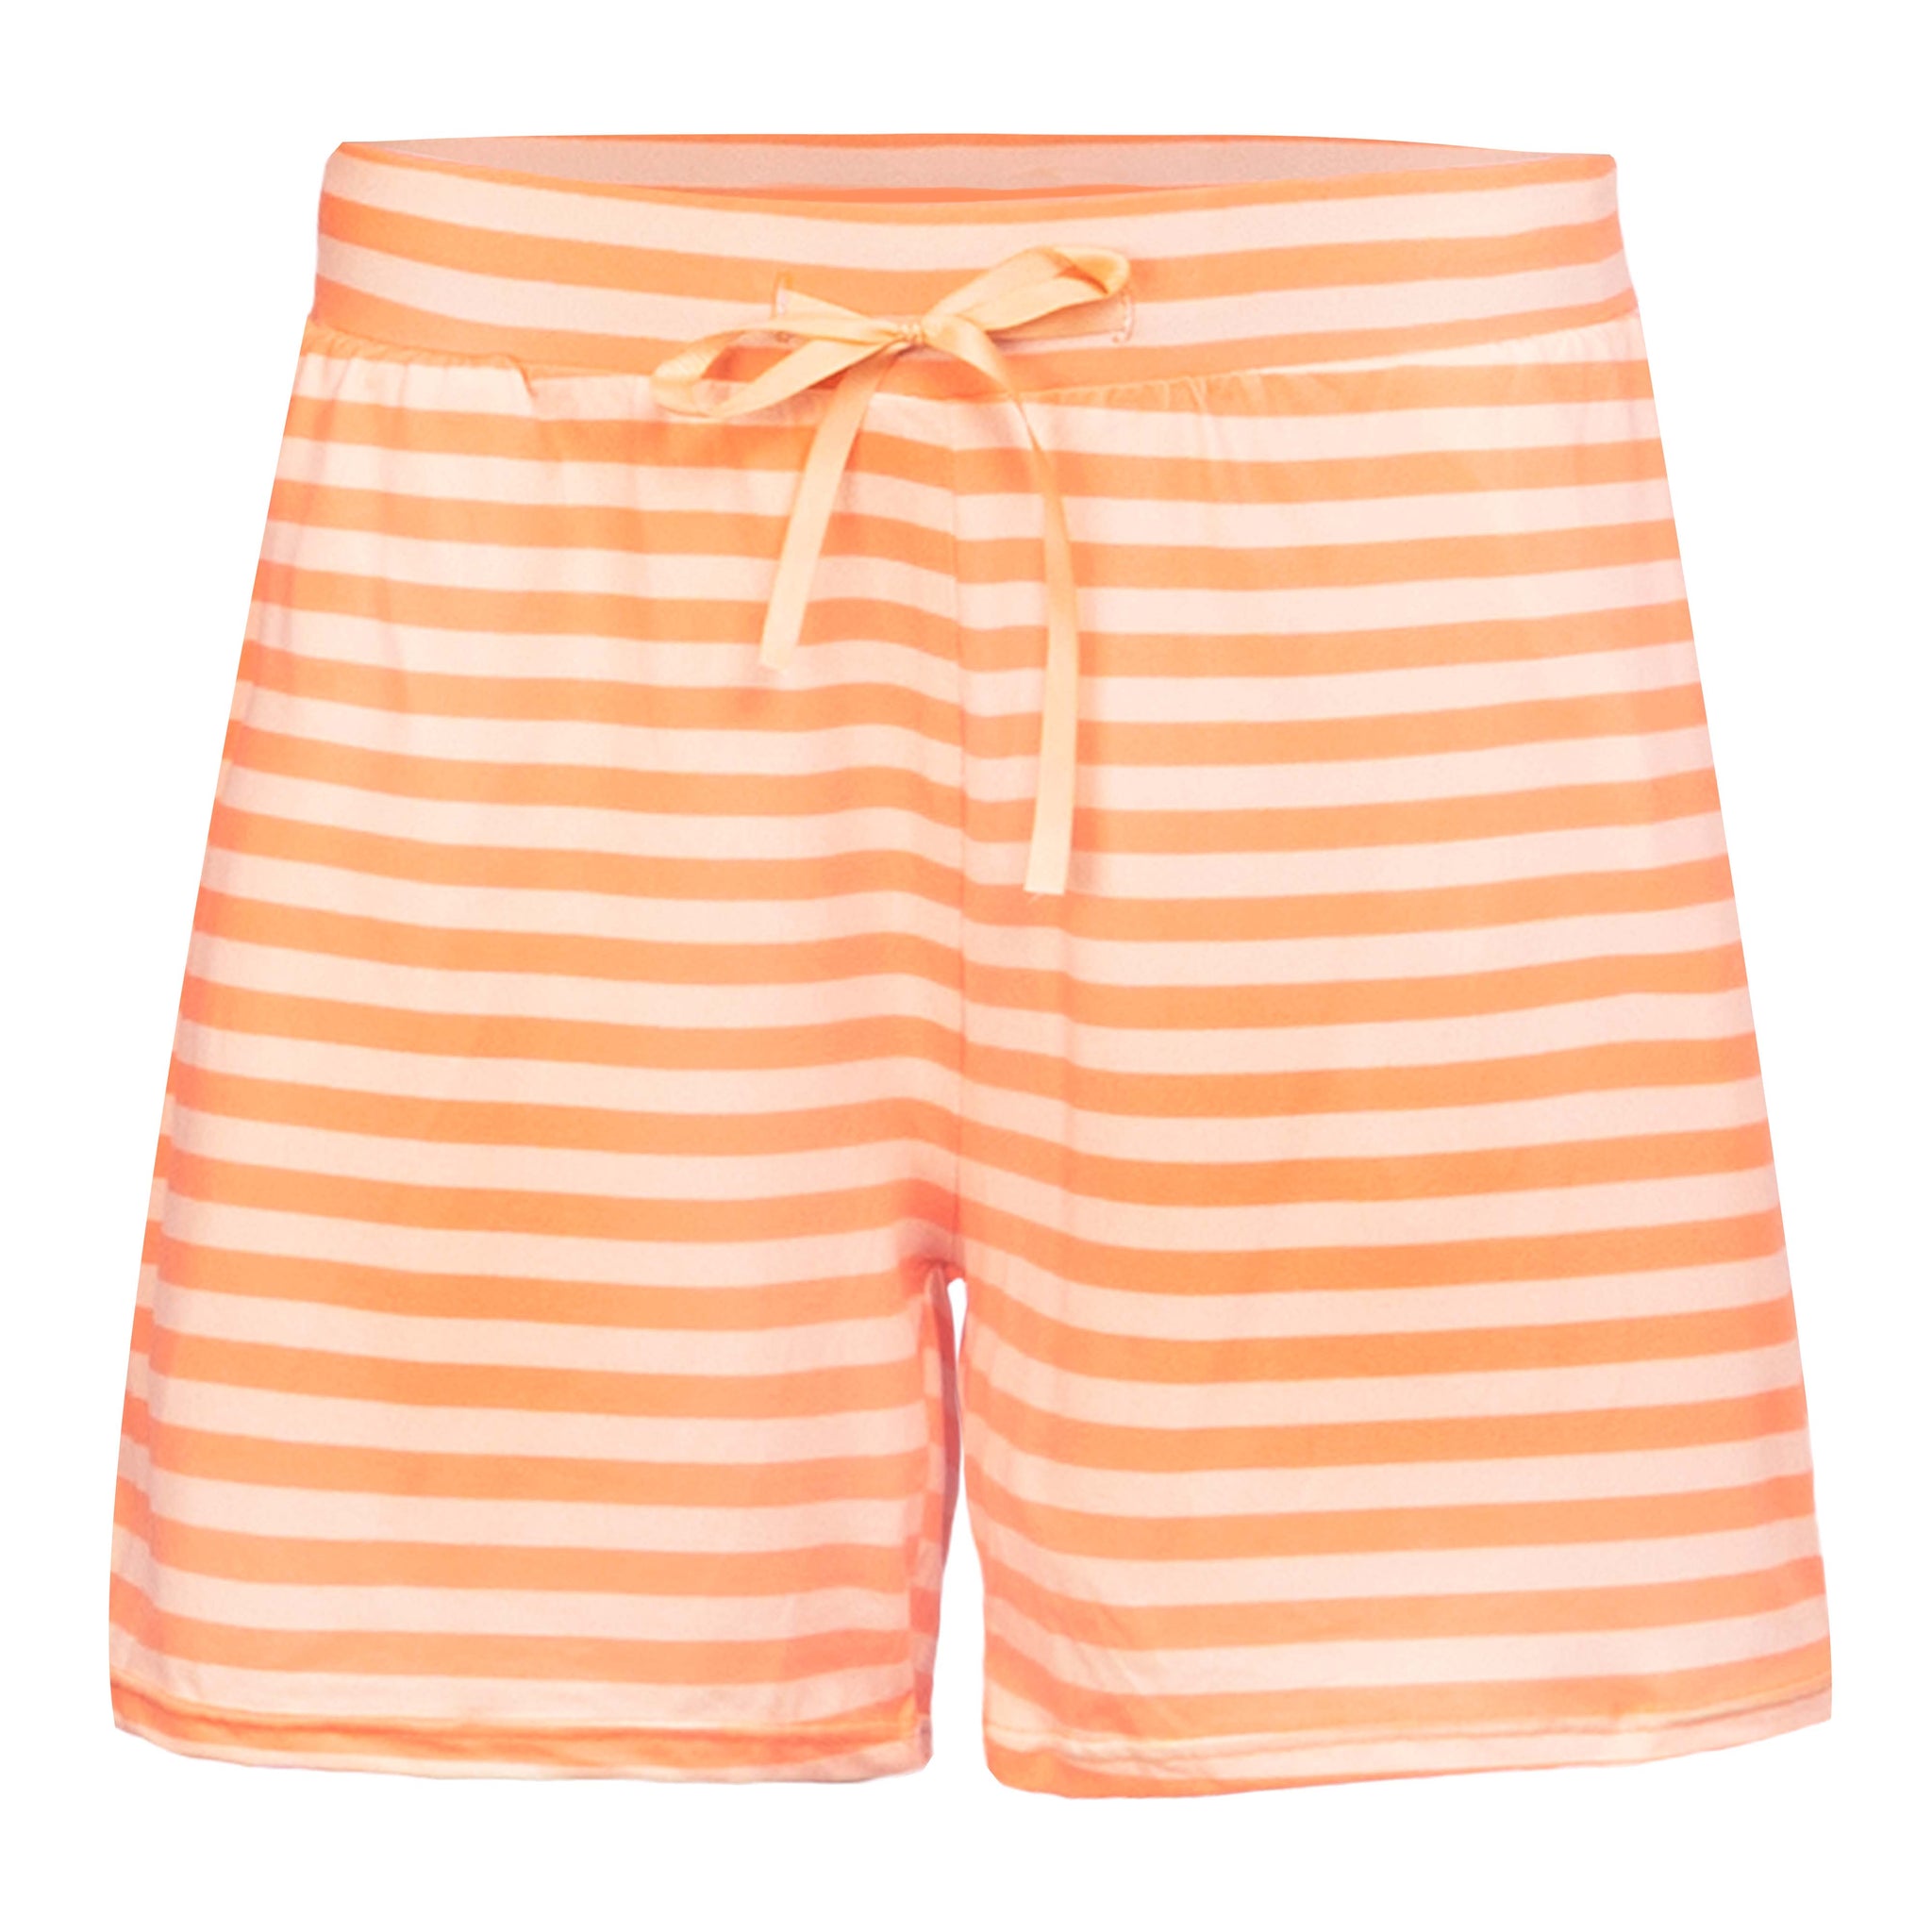 Liberté - Alma Shorts, 9517 - Orange Peach Stripe